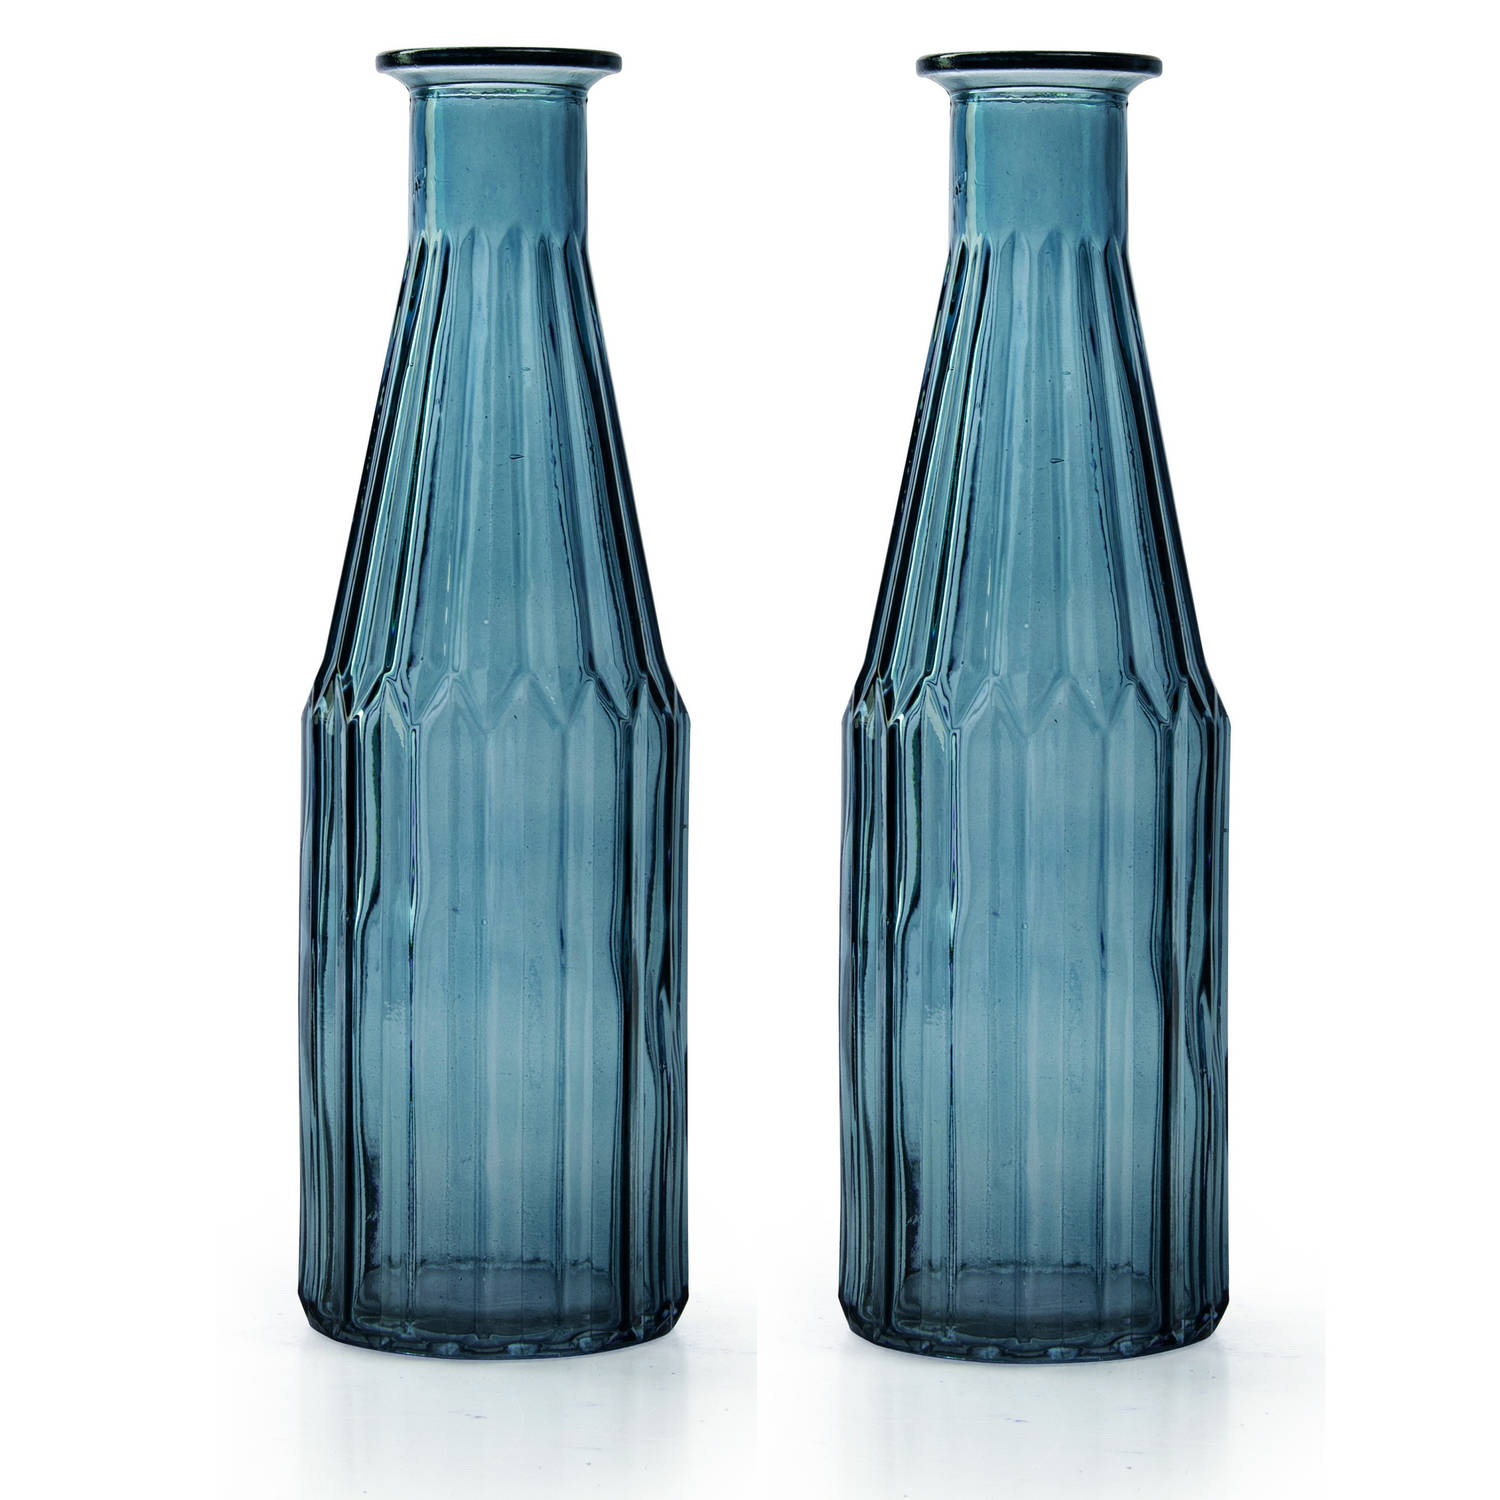 Jodeco Bloemenvaas Marseille - Fles model - glas - blauw - H25 x D7 cm - Vazen